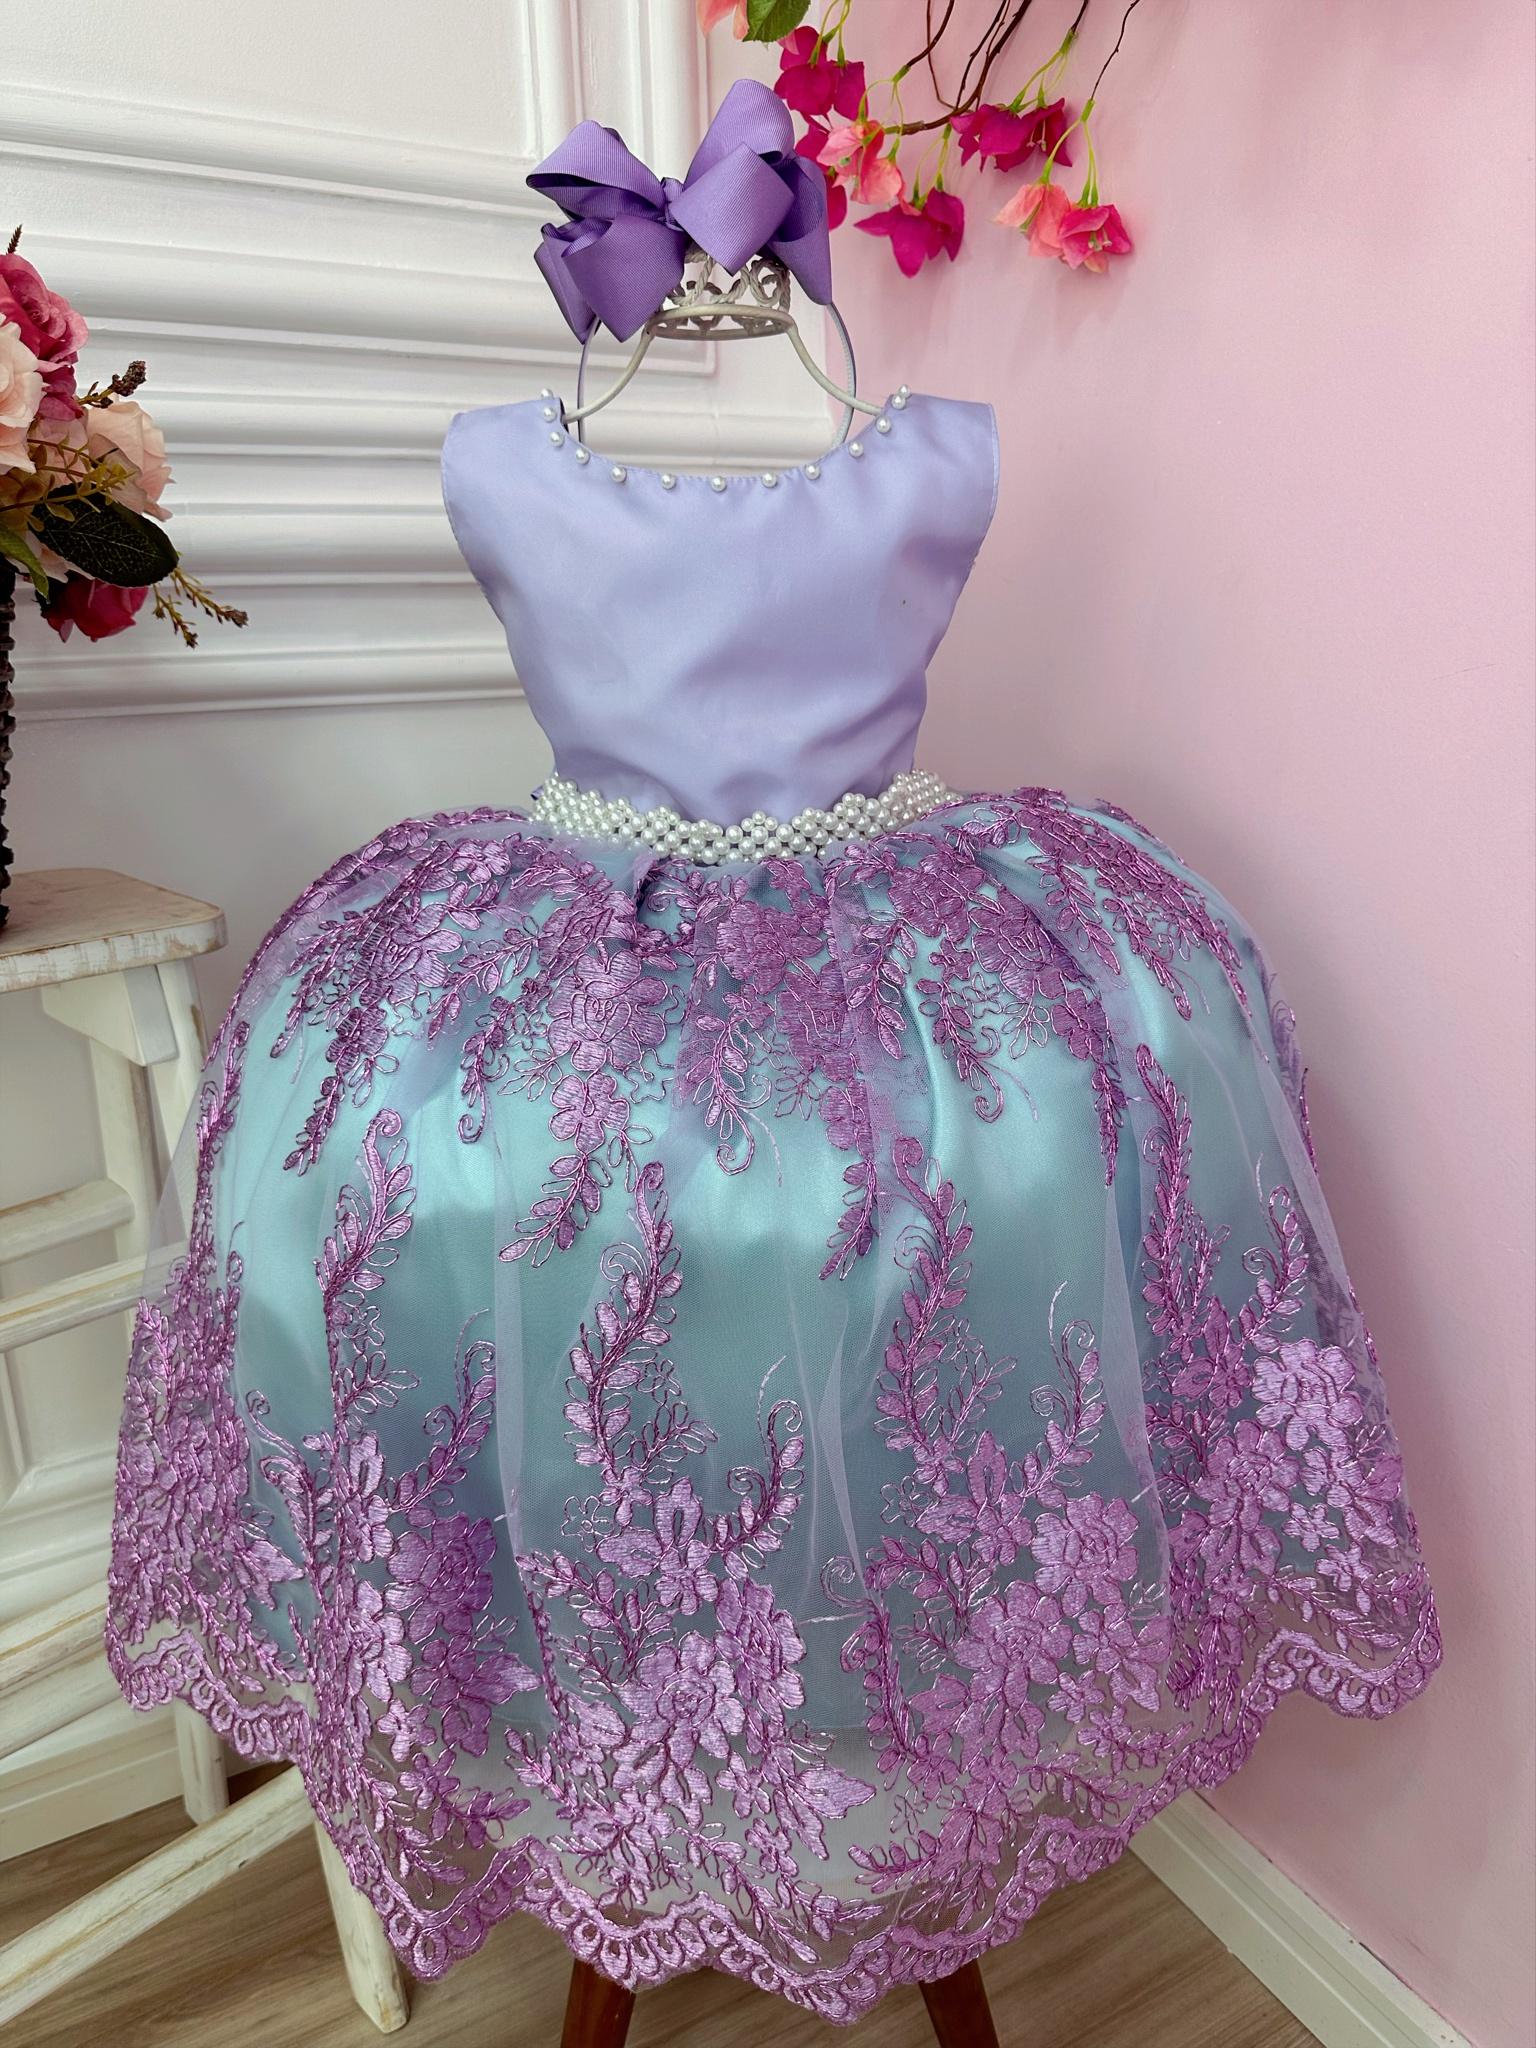 Vestido Infantil Ariel Princesa C/ Renda e Cinto de Pérolas